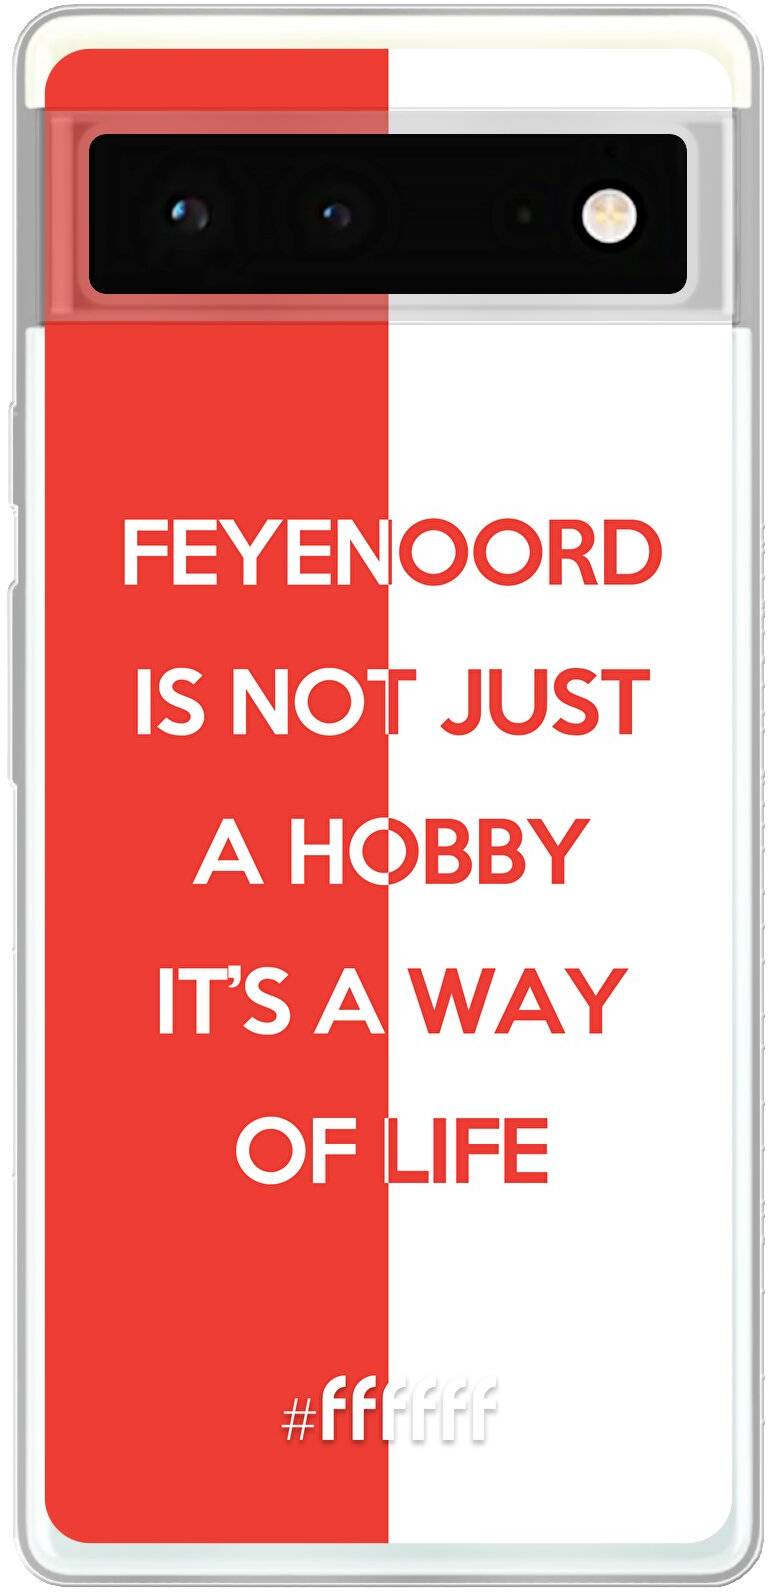 Feyenoord - Way of life Pixel 6